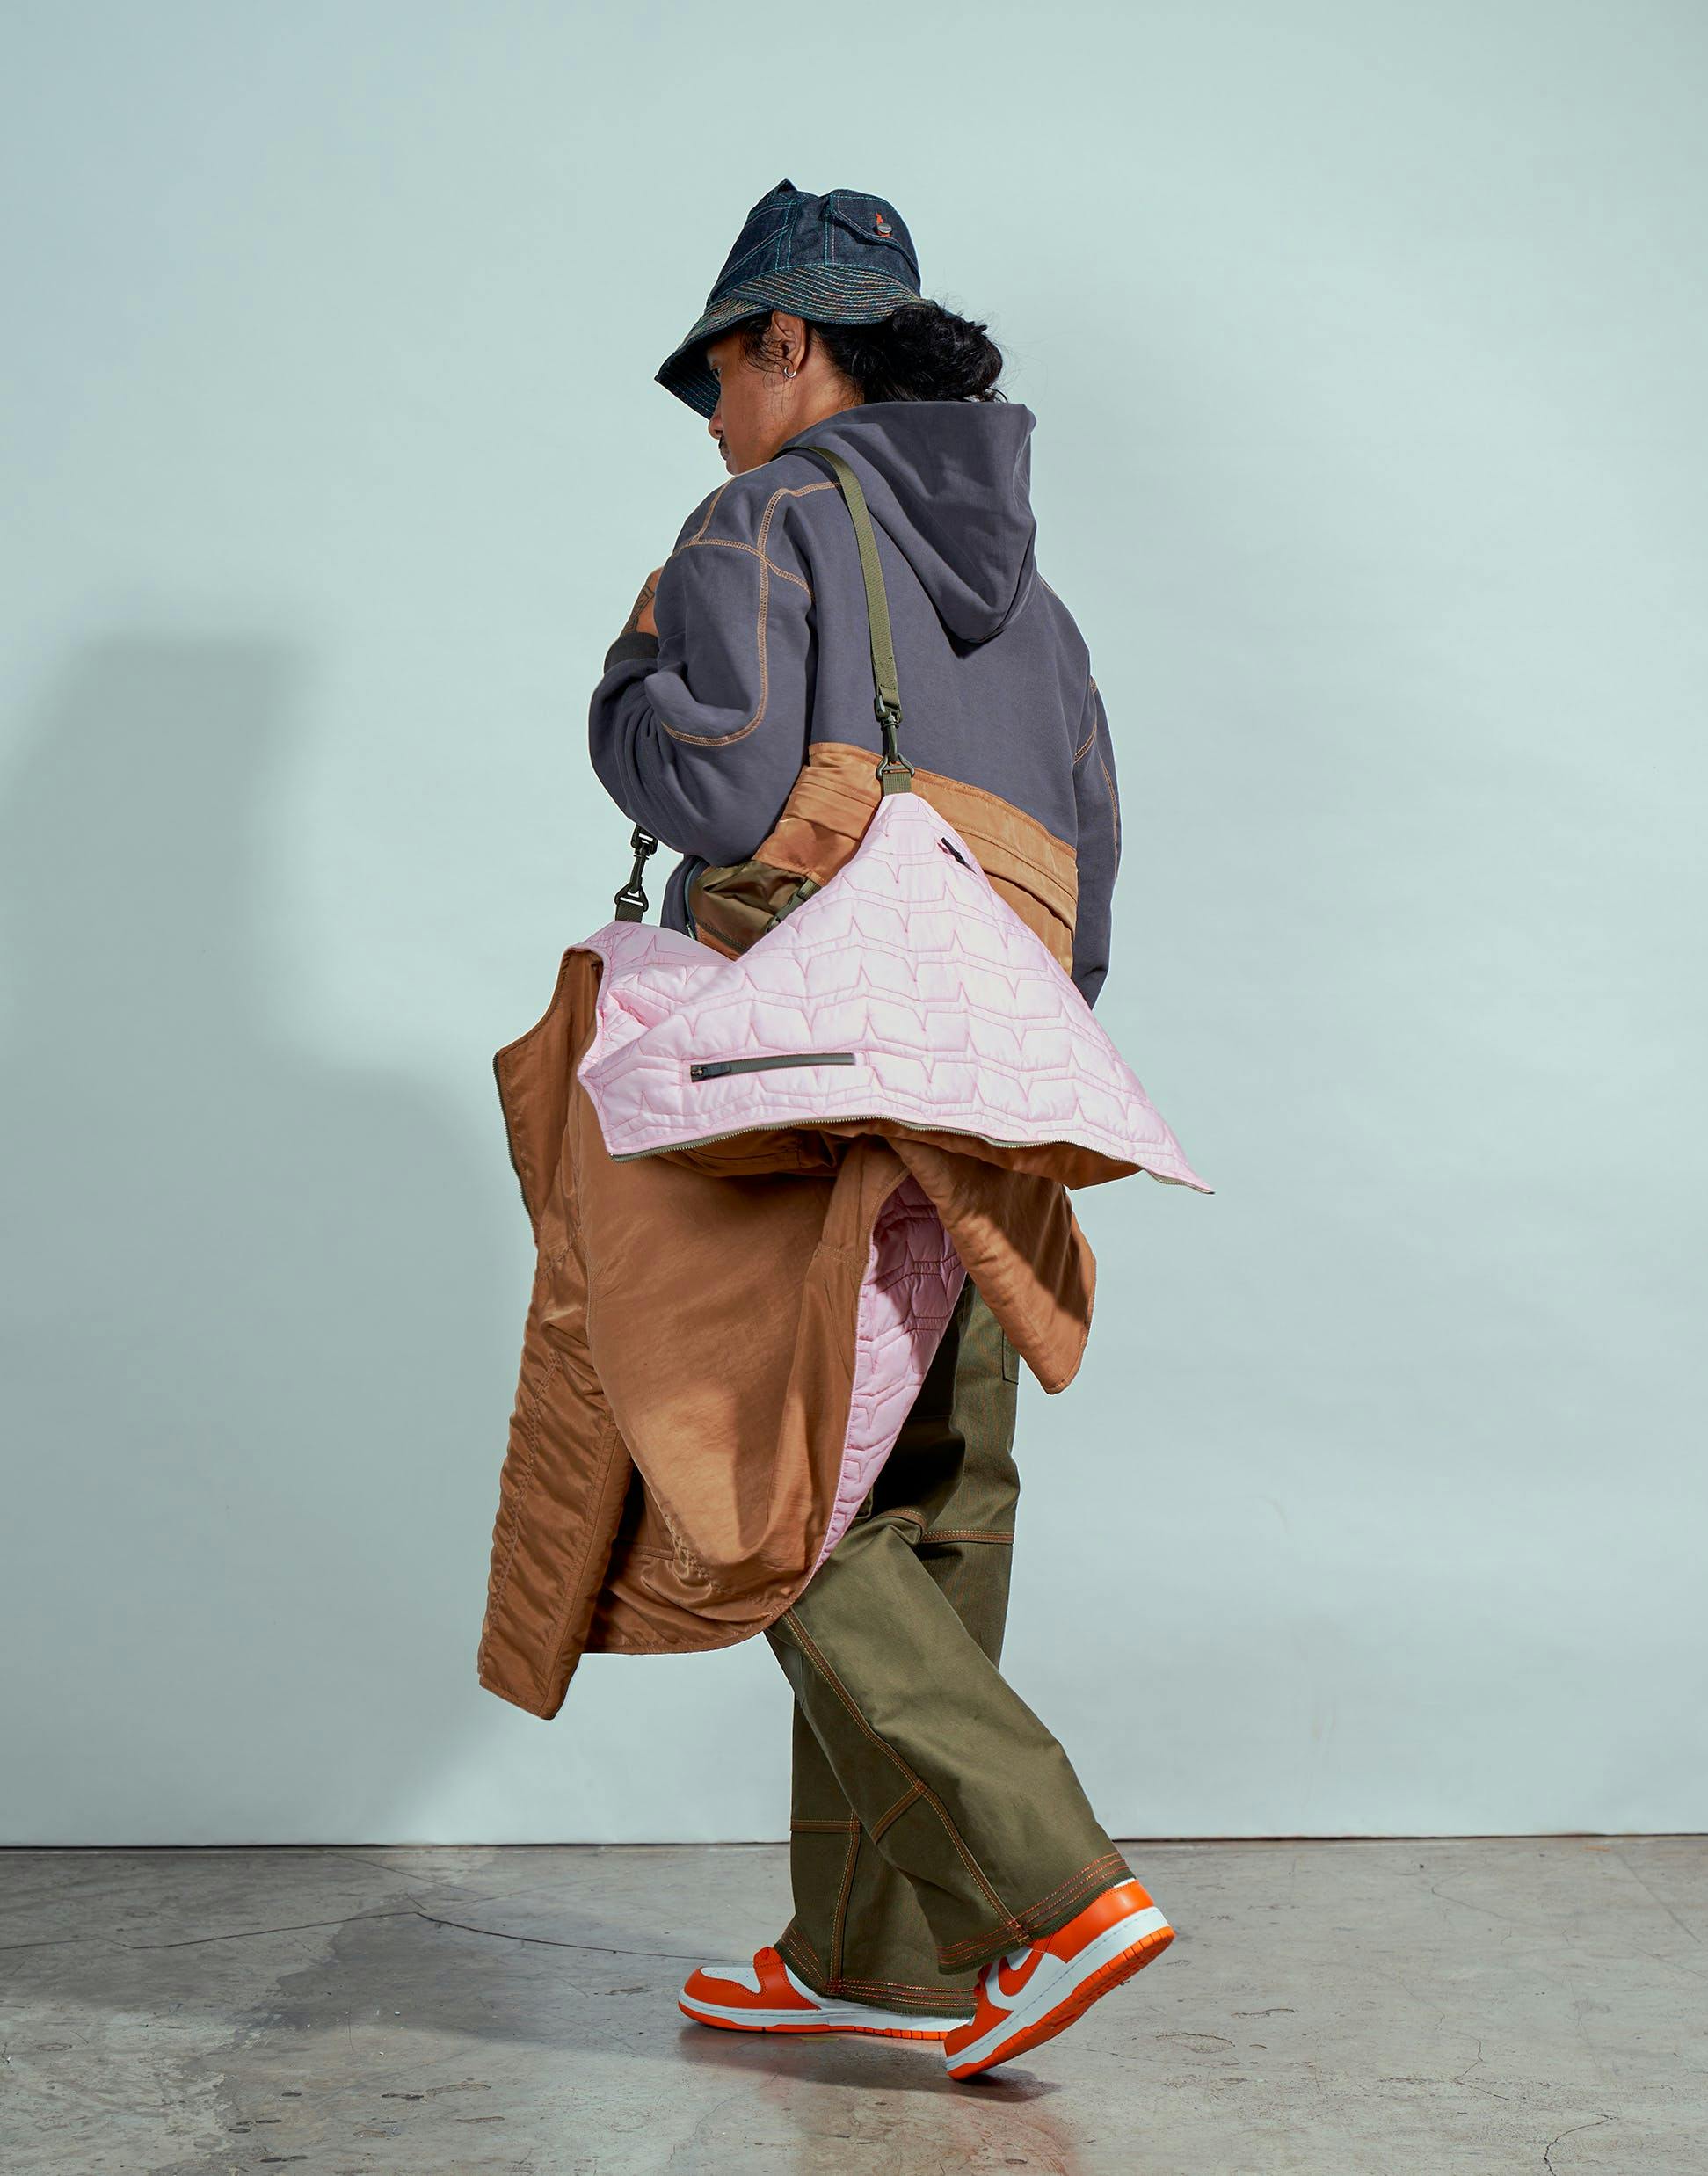 coat bag handbag hat sun hat fashion adult male man person